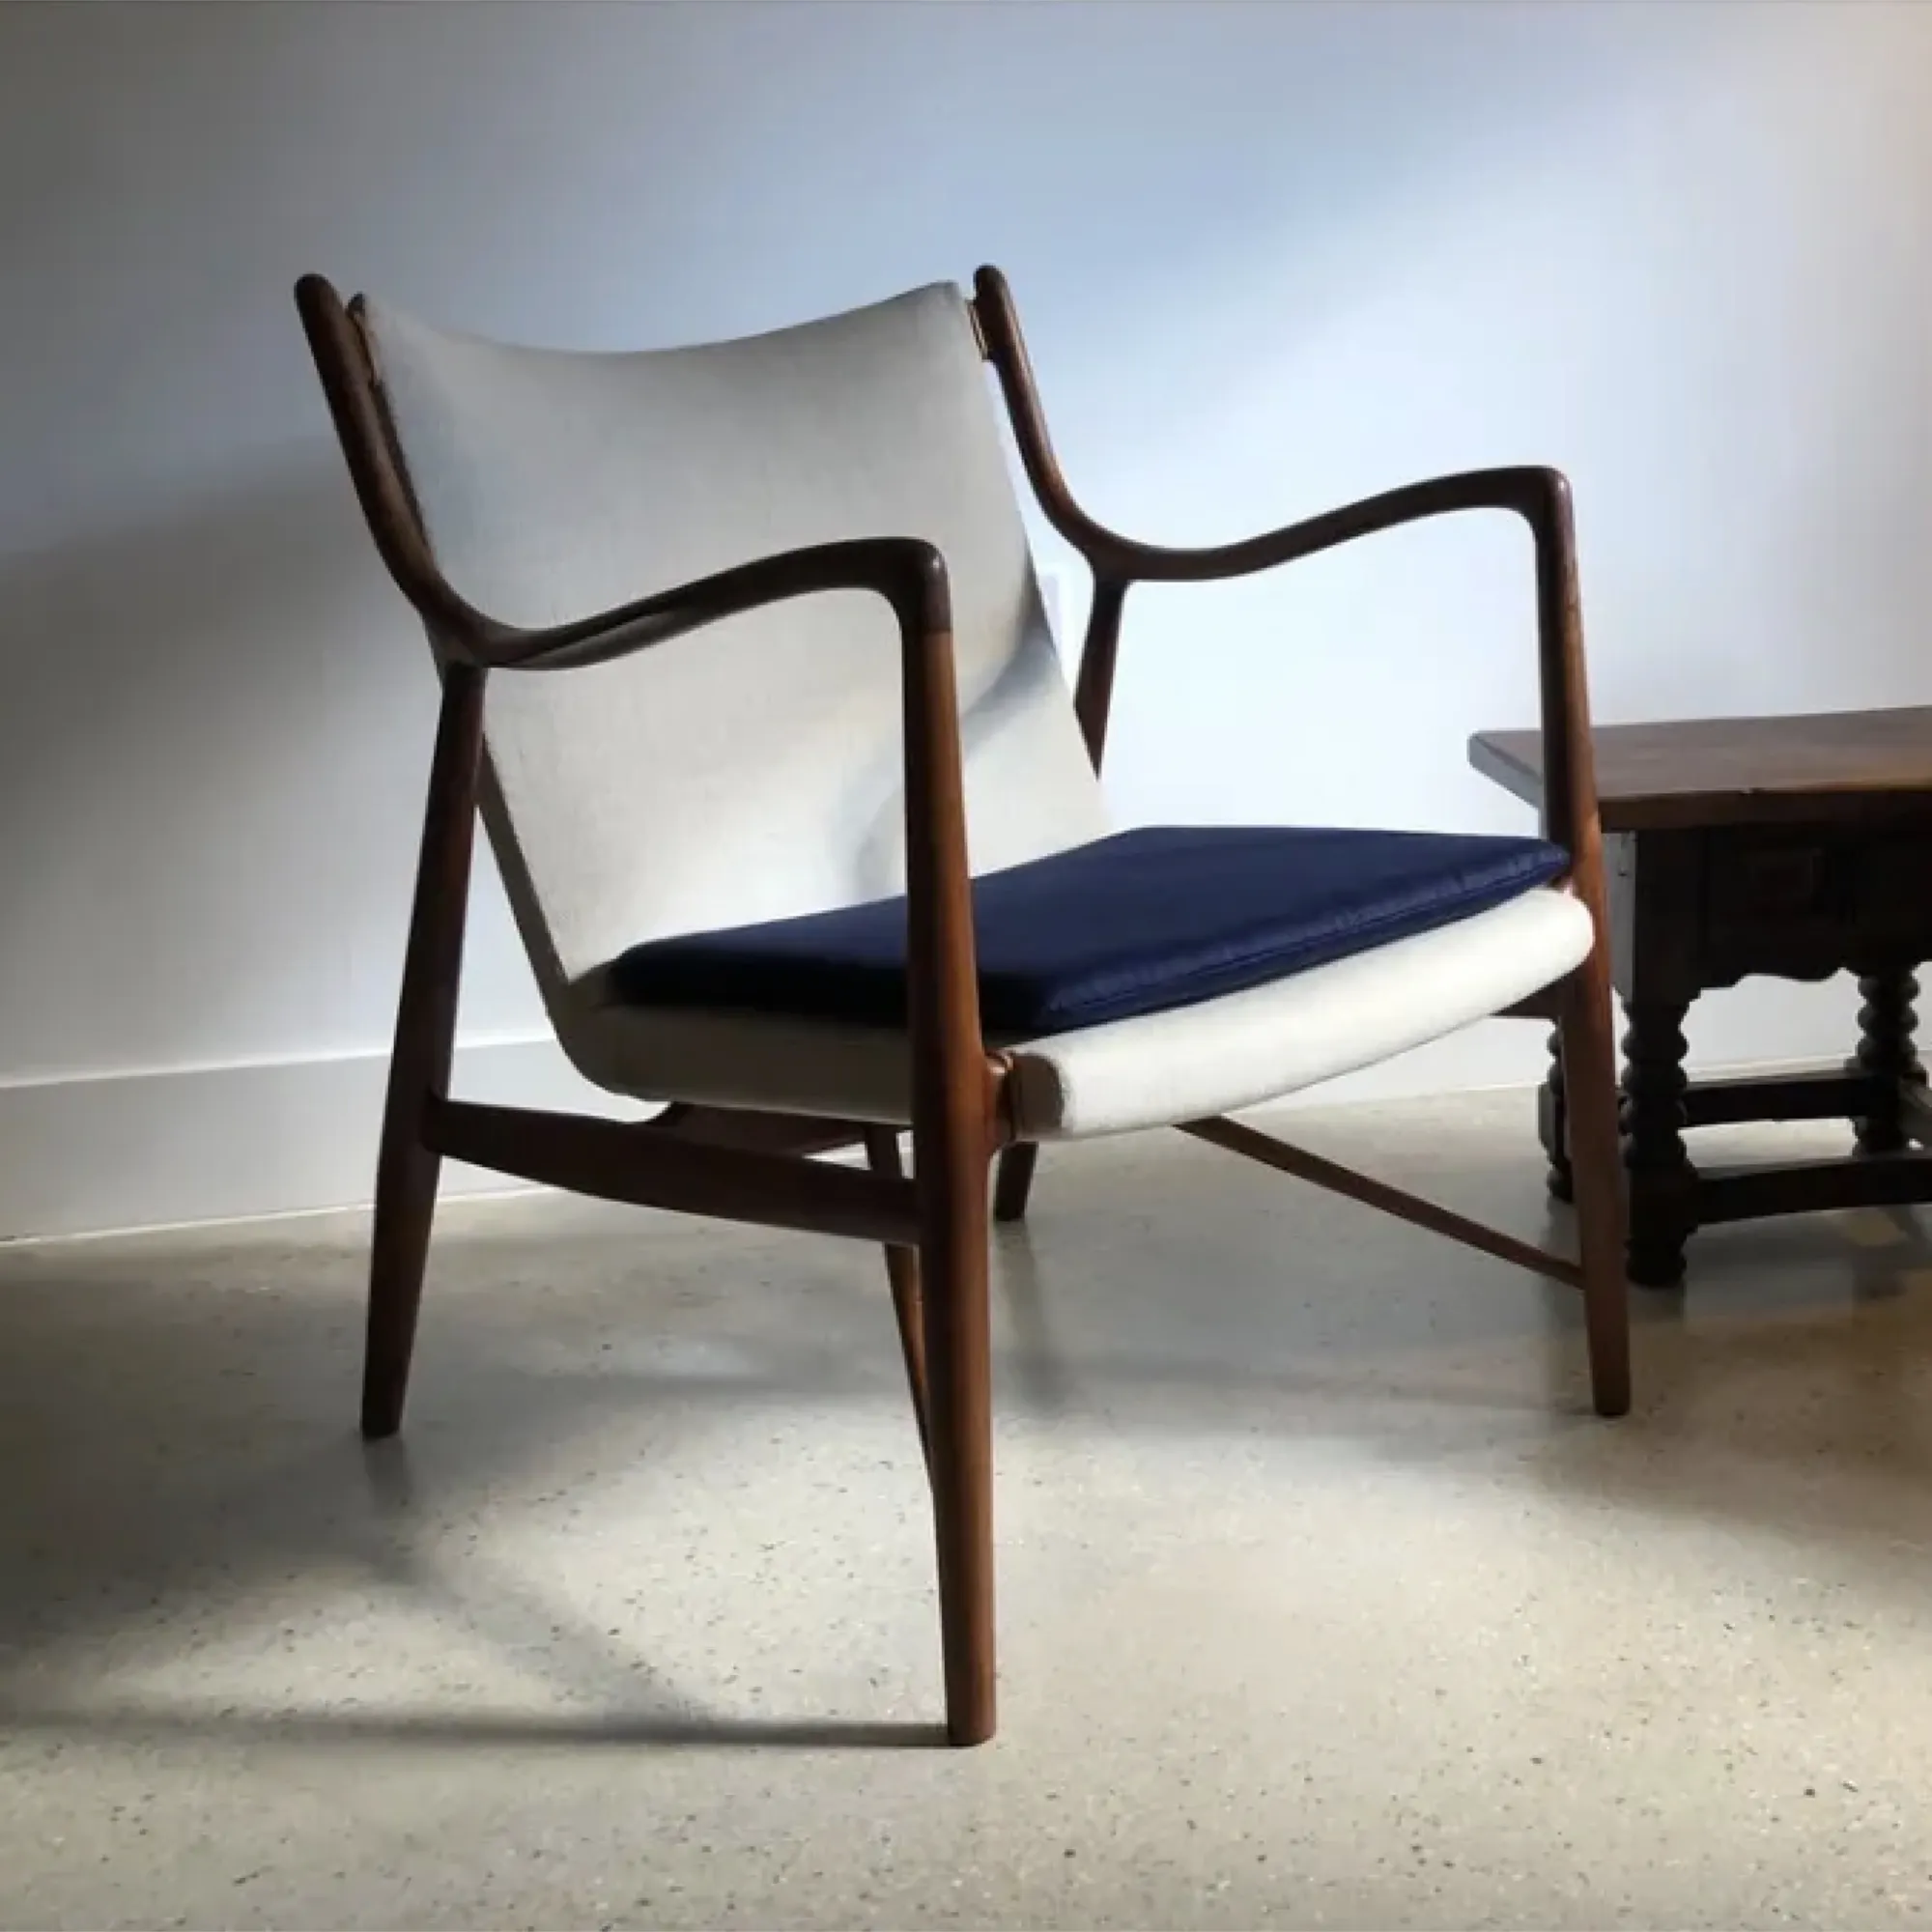 Finn Juhl 45 chair with oiled walnut frame and maharam silversmith dark leather upholstery